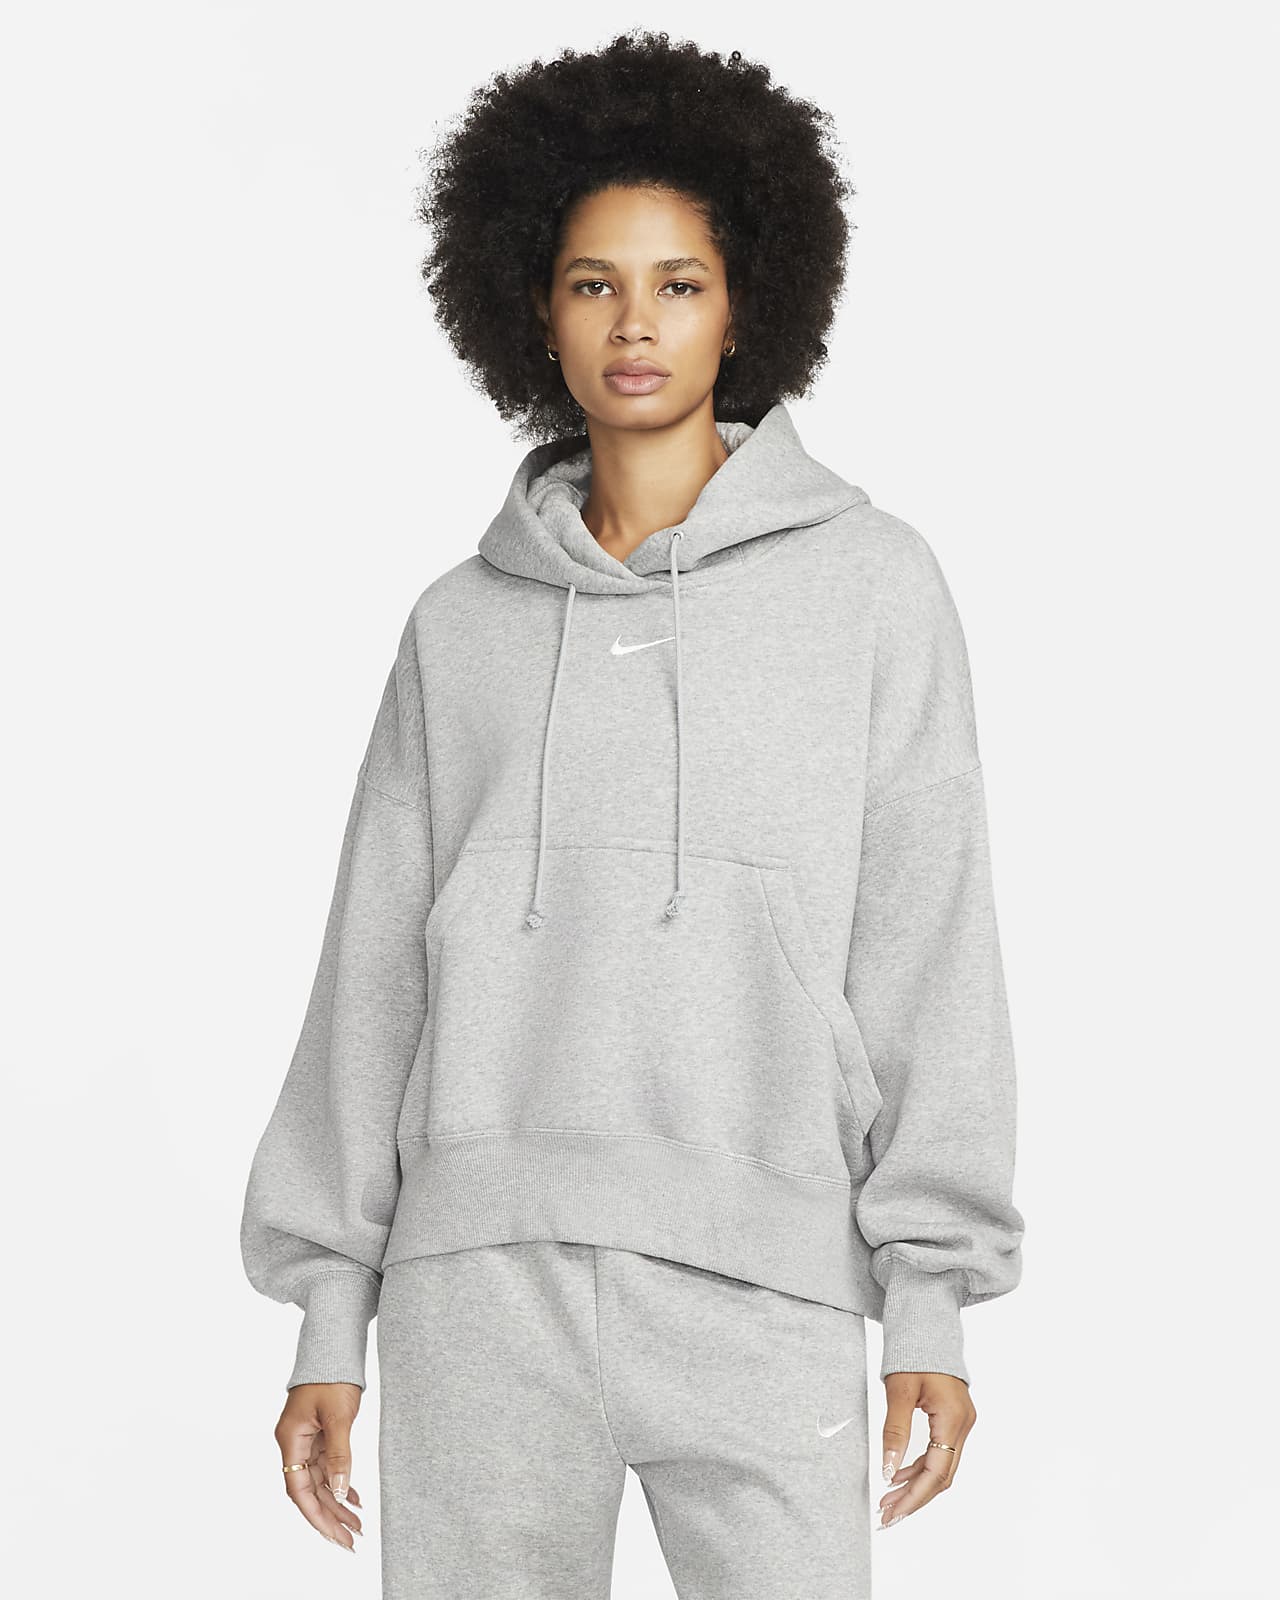 Hoodie pullover extremamente folgado Nike Sportswear Phoenix Fleece para mulher